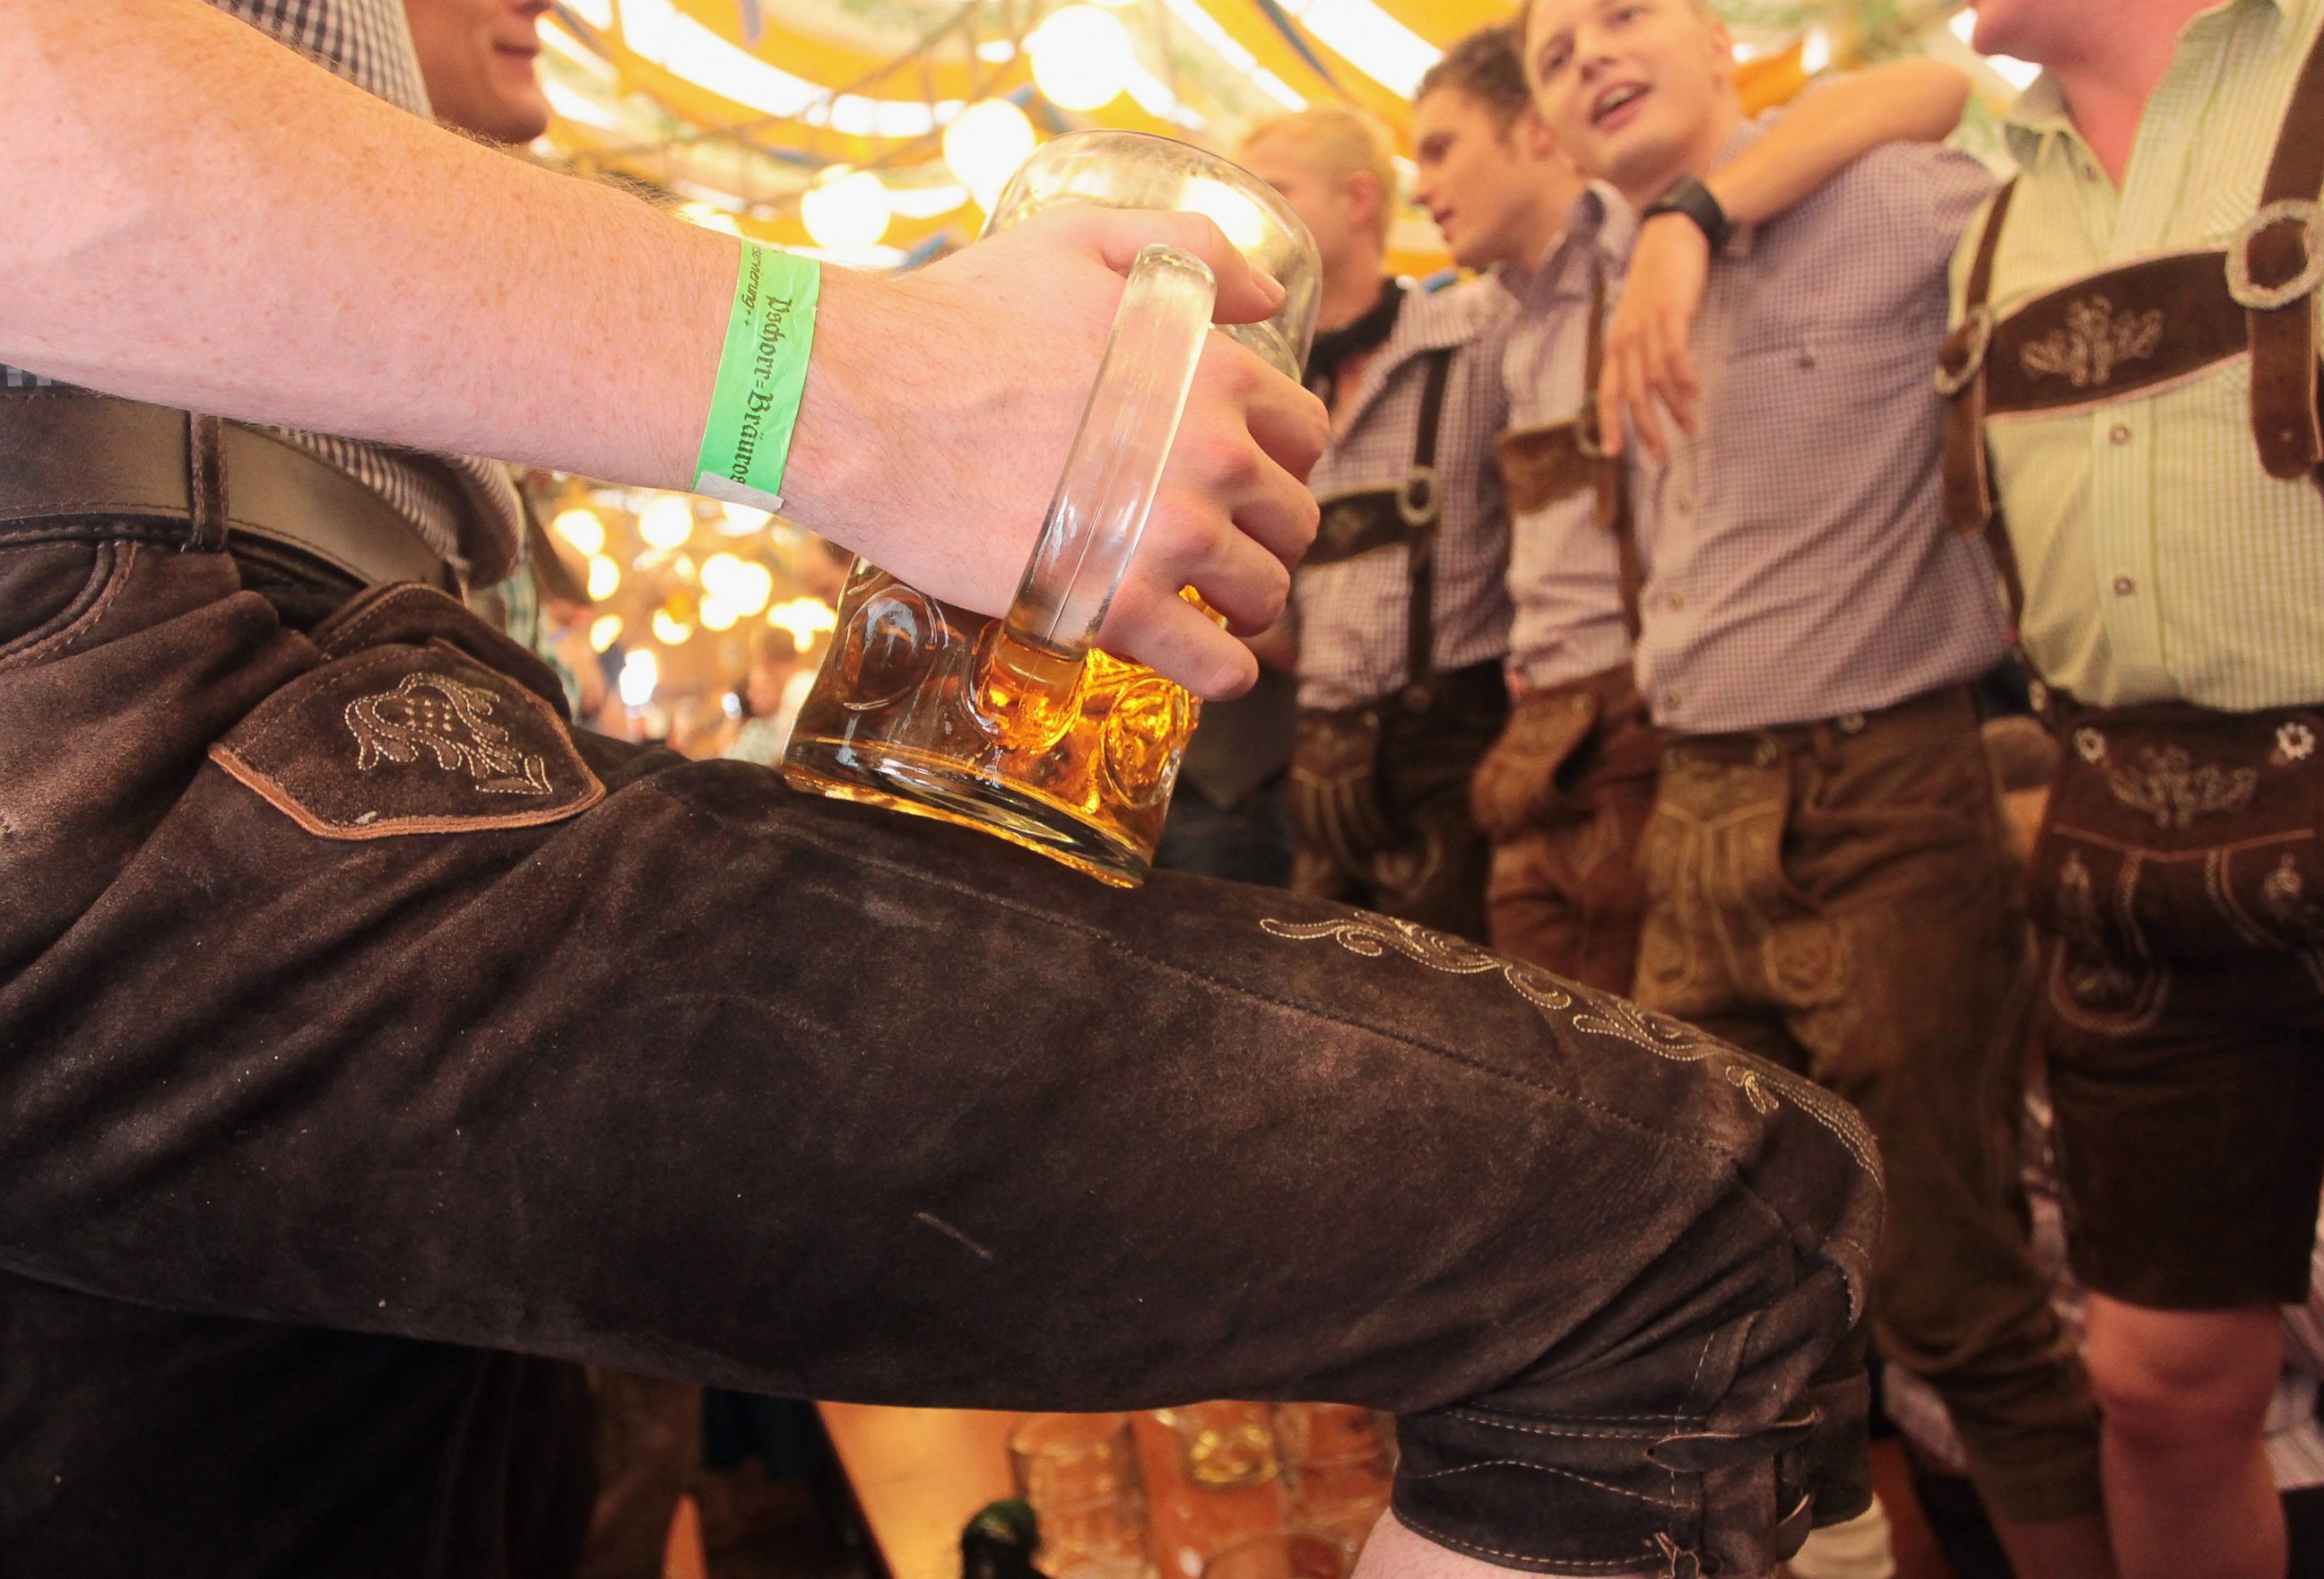 PHOTO: Revellers dressed with traditional Bavarian Lederhosen trousers enjoy drinking beer